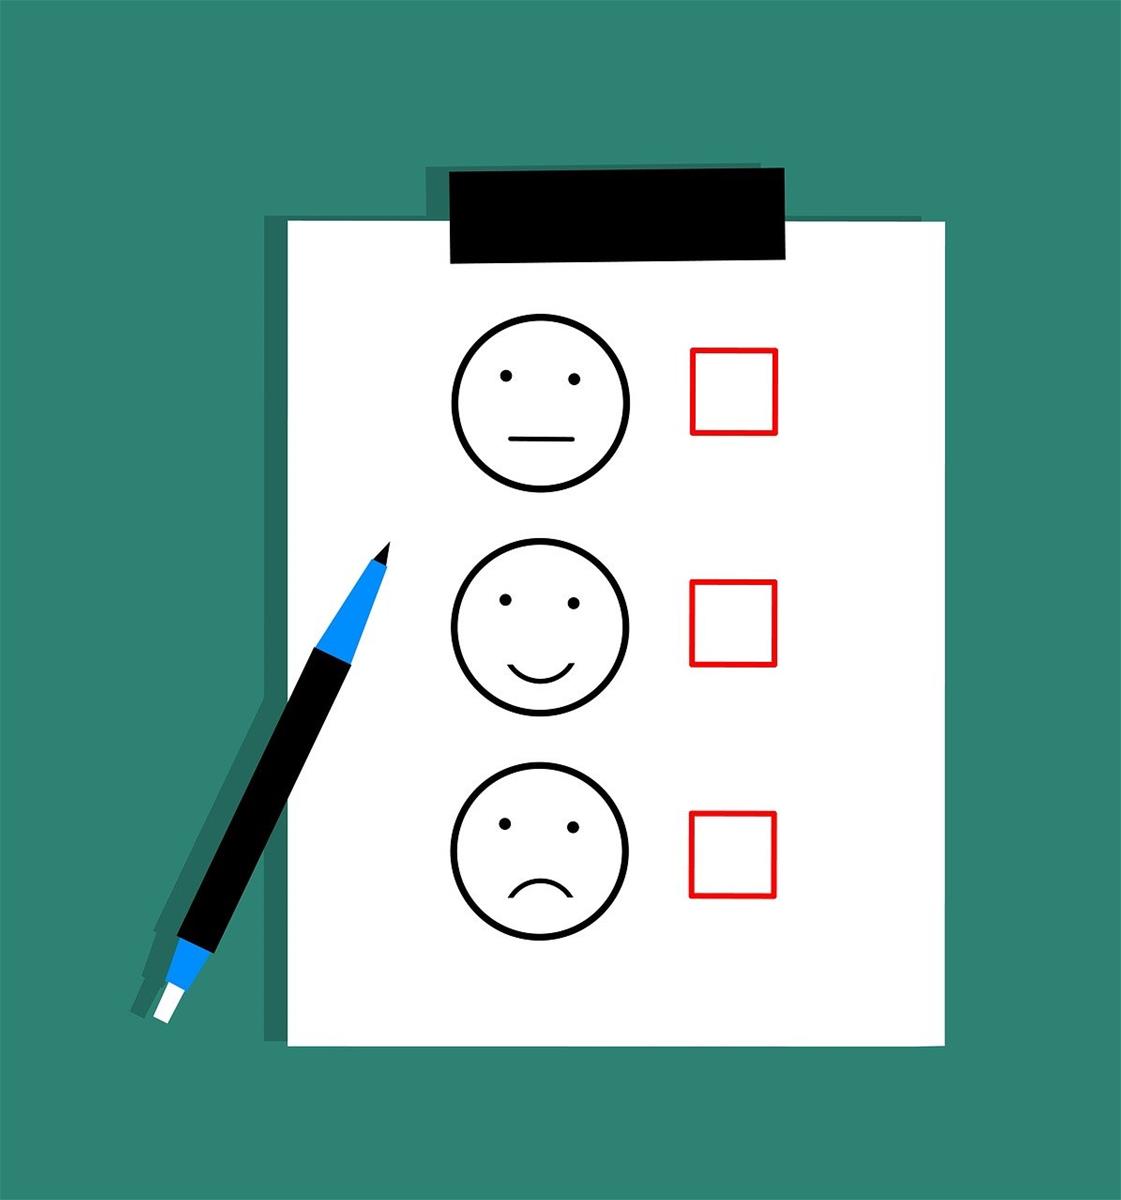 Customer satisfaction survey will be renewed!